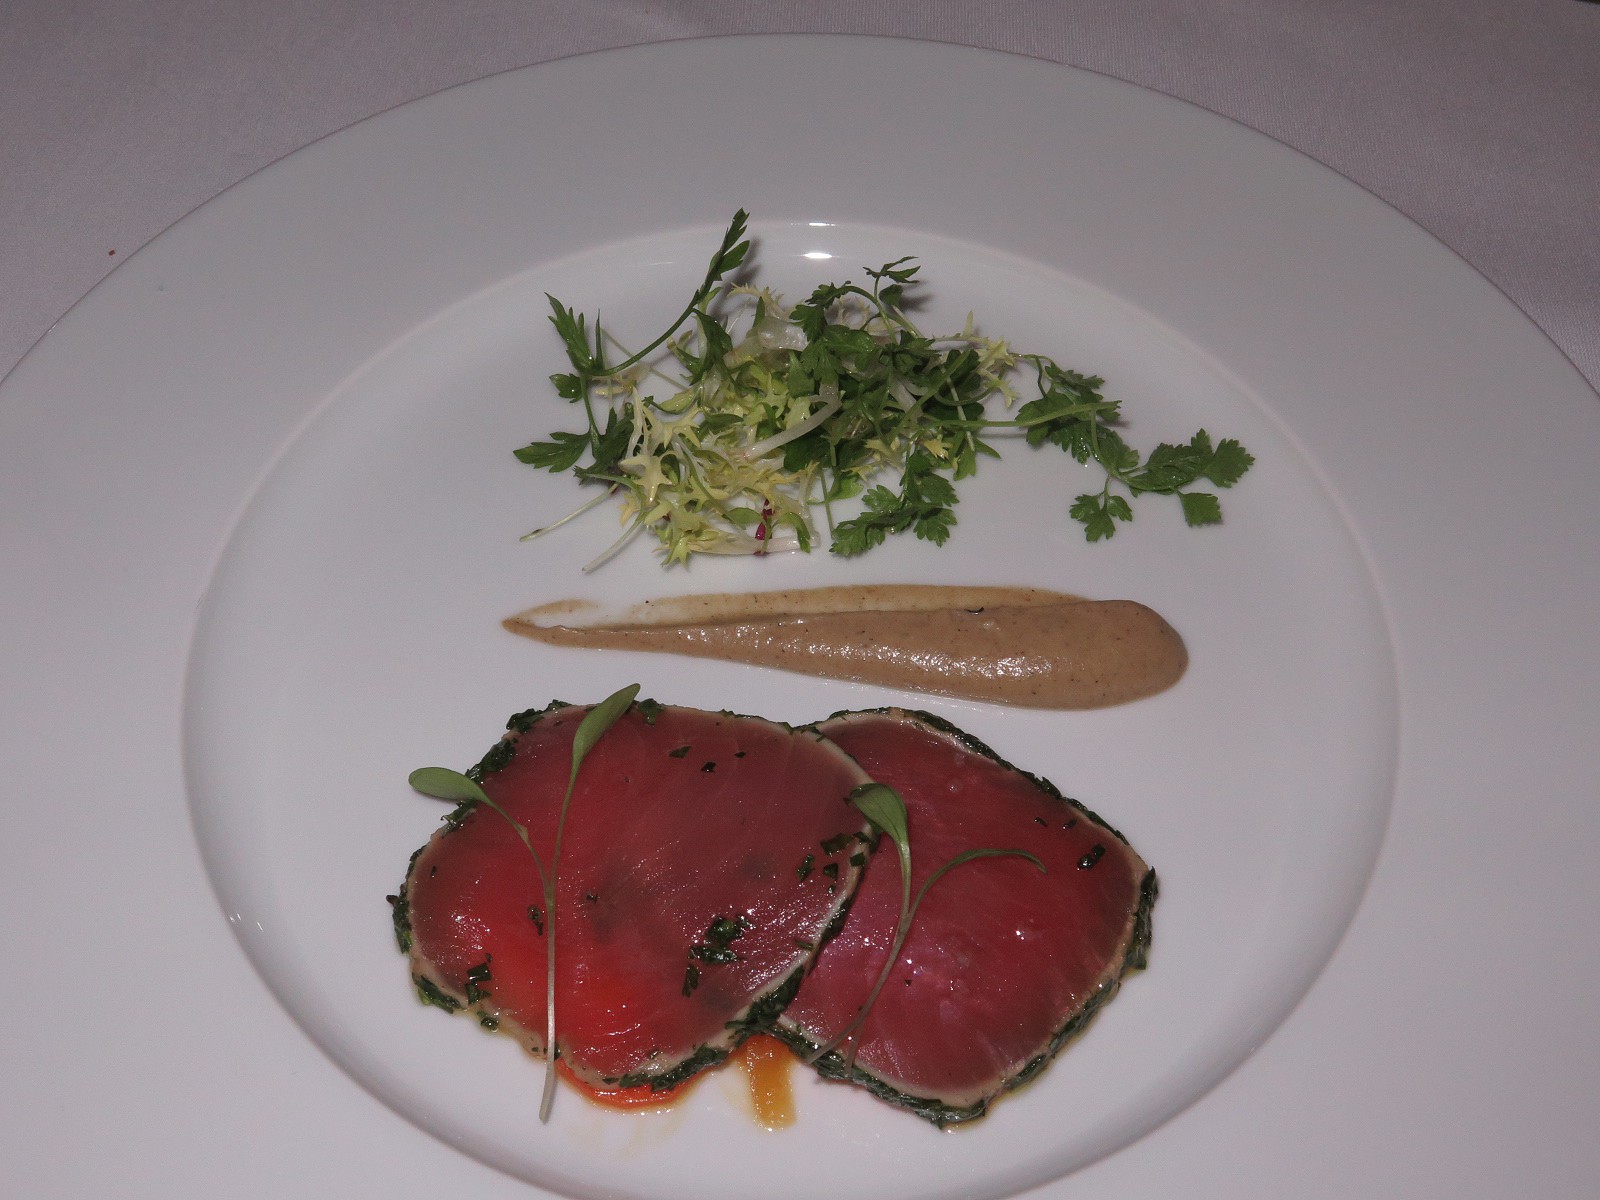 “Escabèche of yellowfin tuna, aubergine purée and herbs”